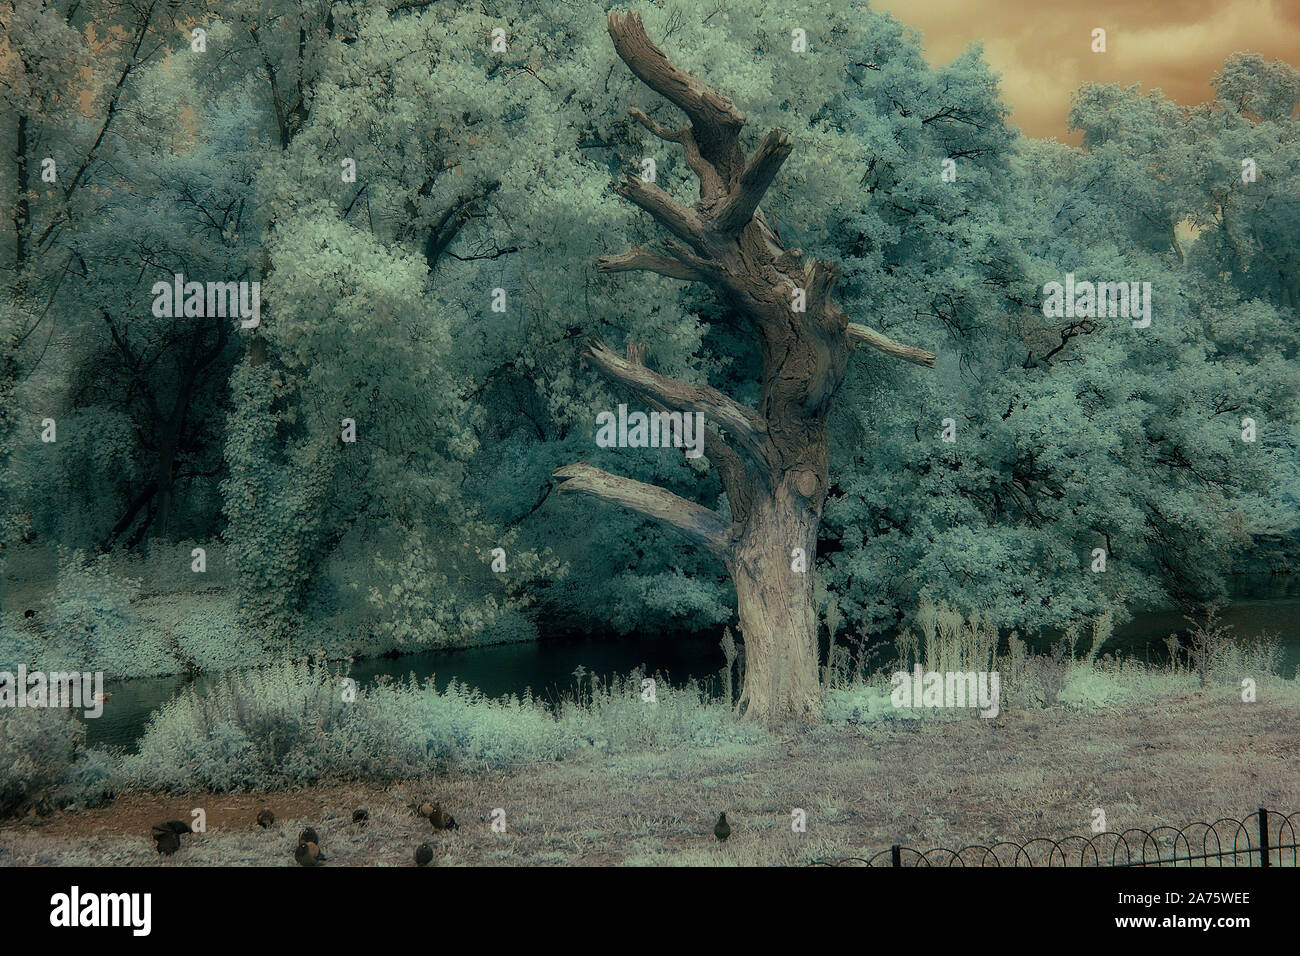 infrared image - illusion of wintertime - dead tree - regent's park - city of london - england - uk Stock Photo